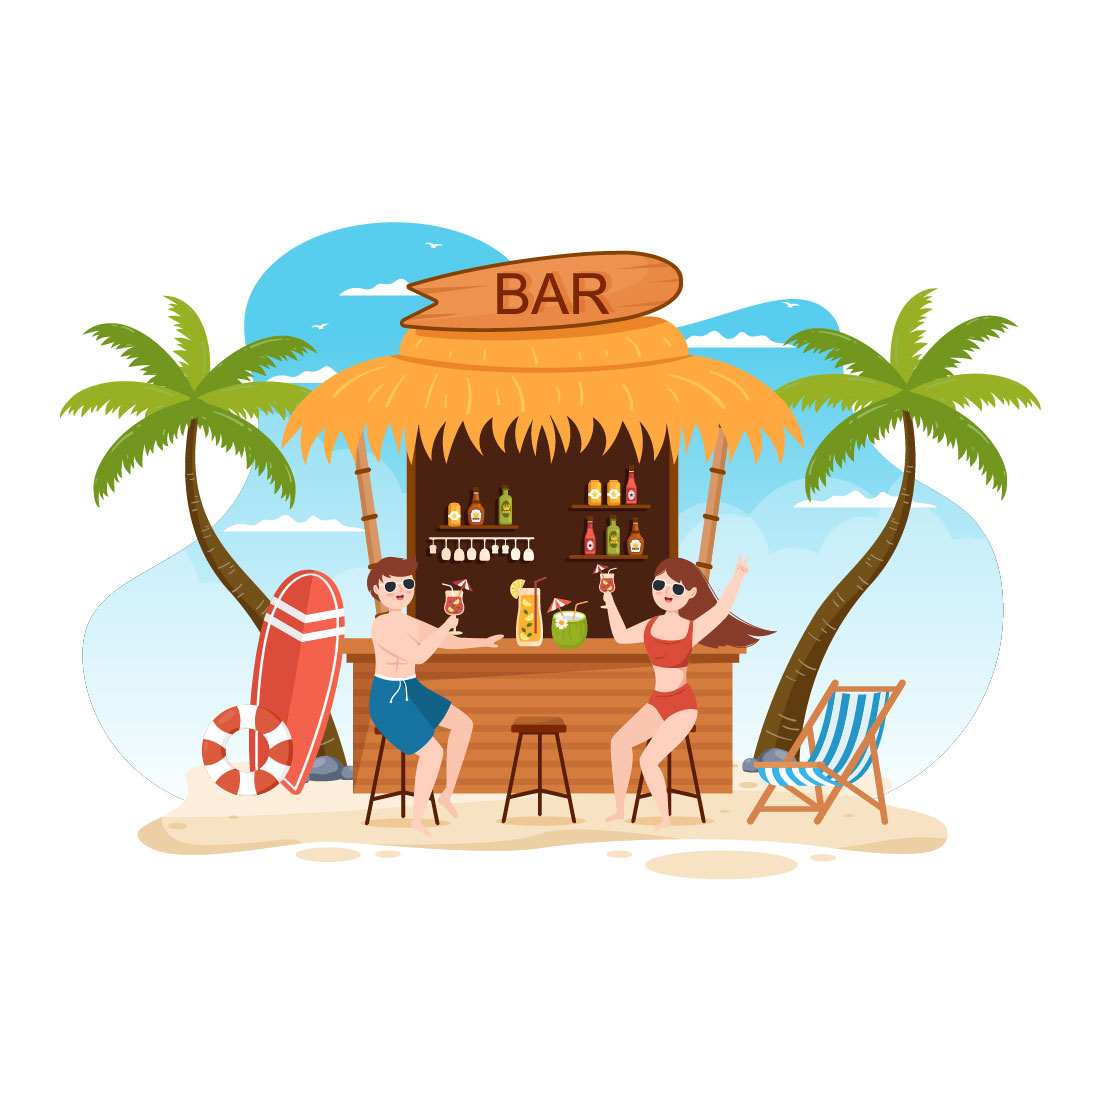 Gorgeous cartoon image of a beach cocktail bar.